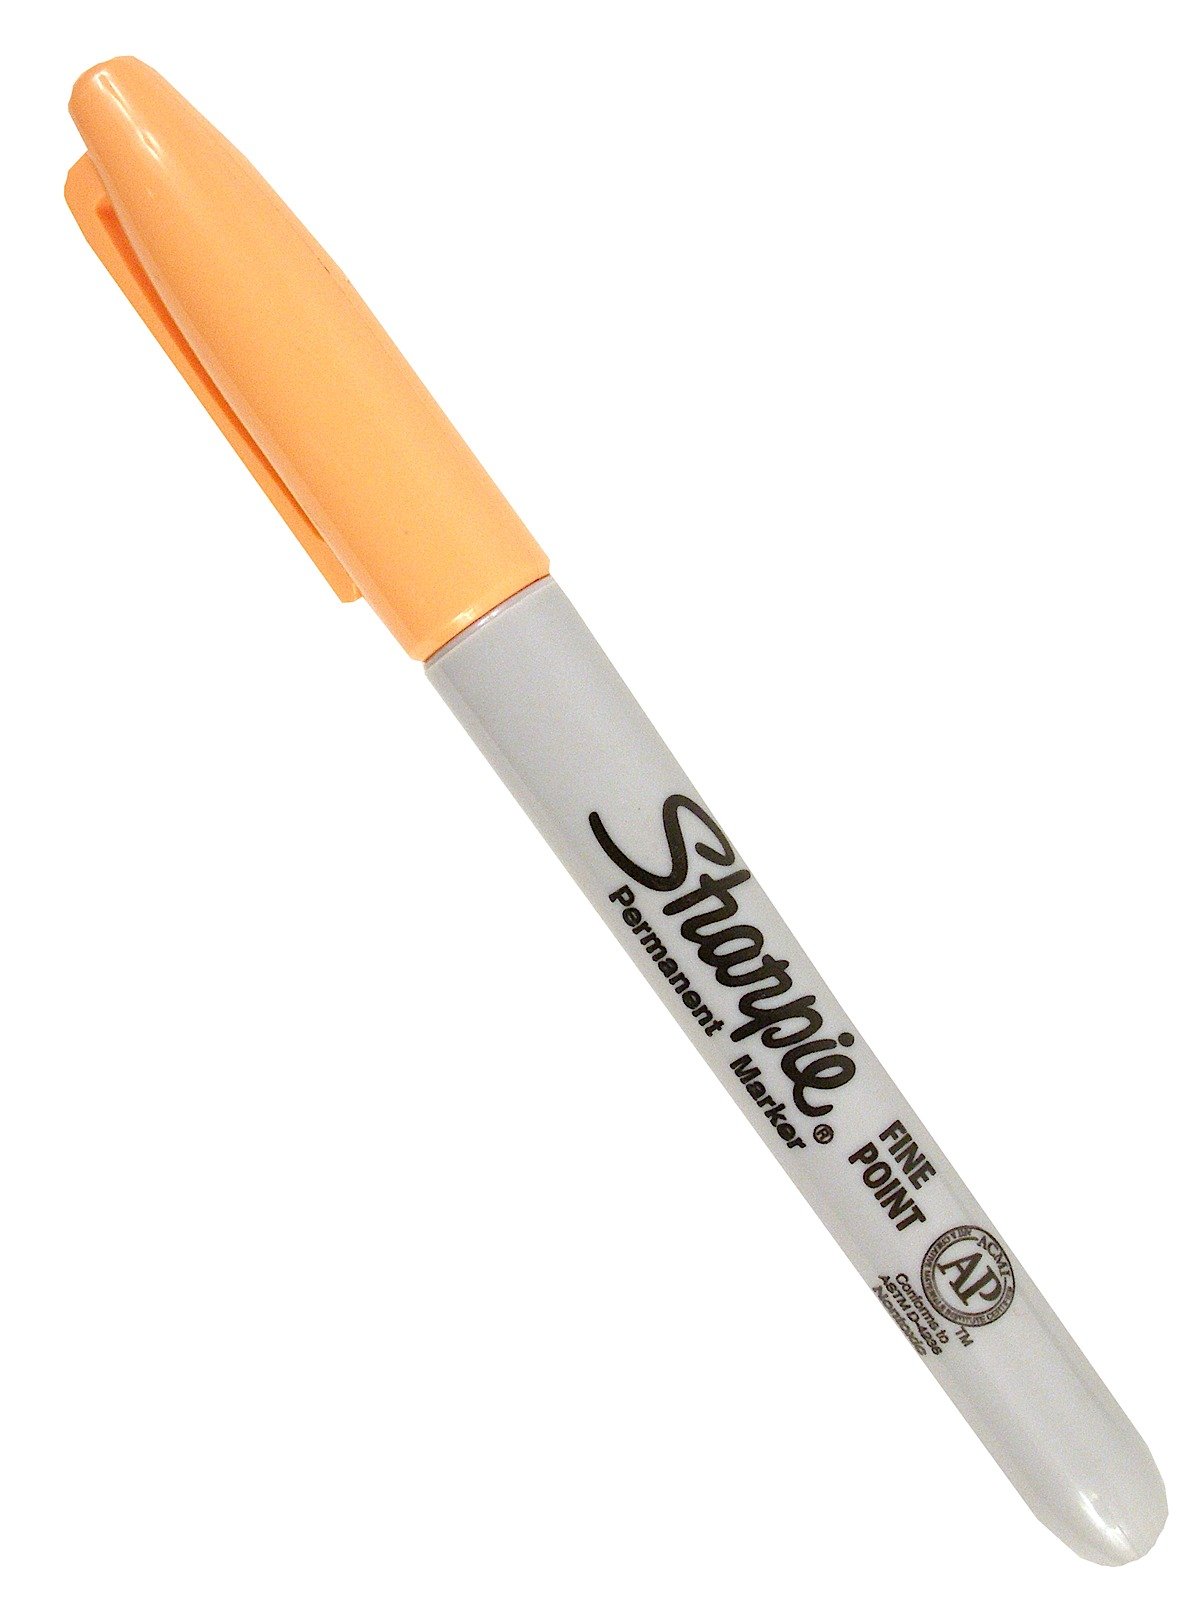 Sharpie Brush Tip Permanent Marker - Berry